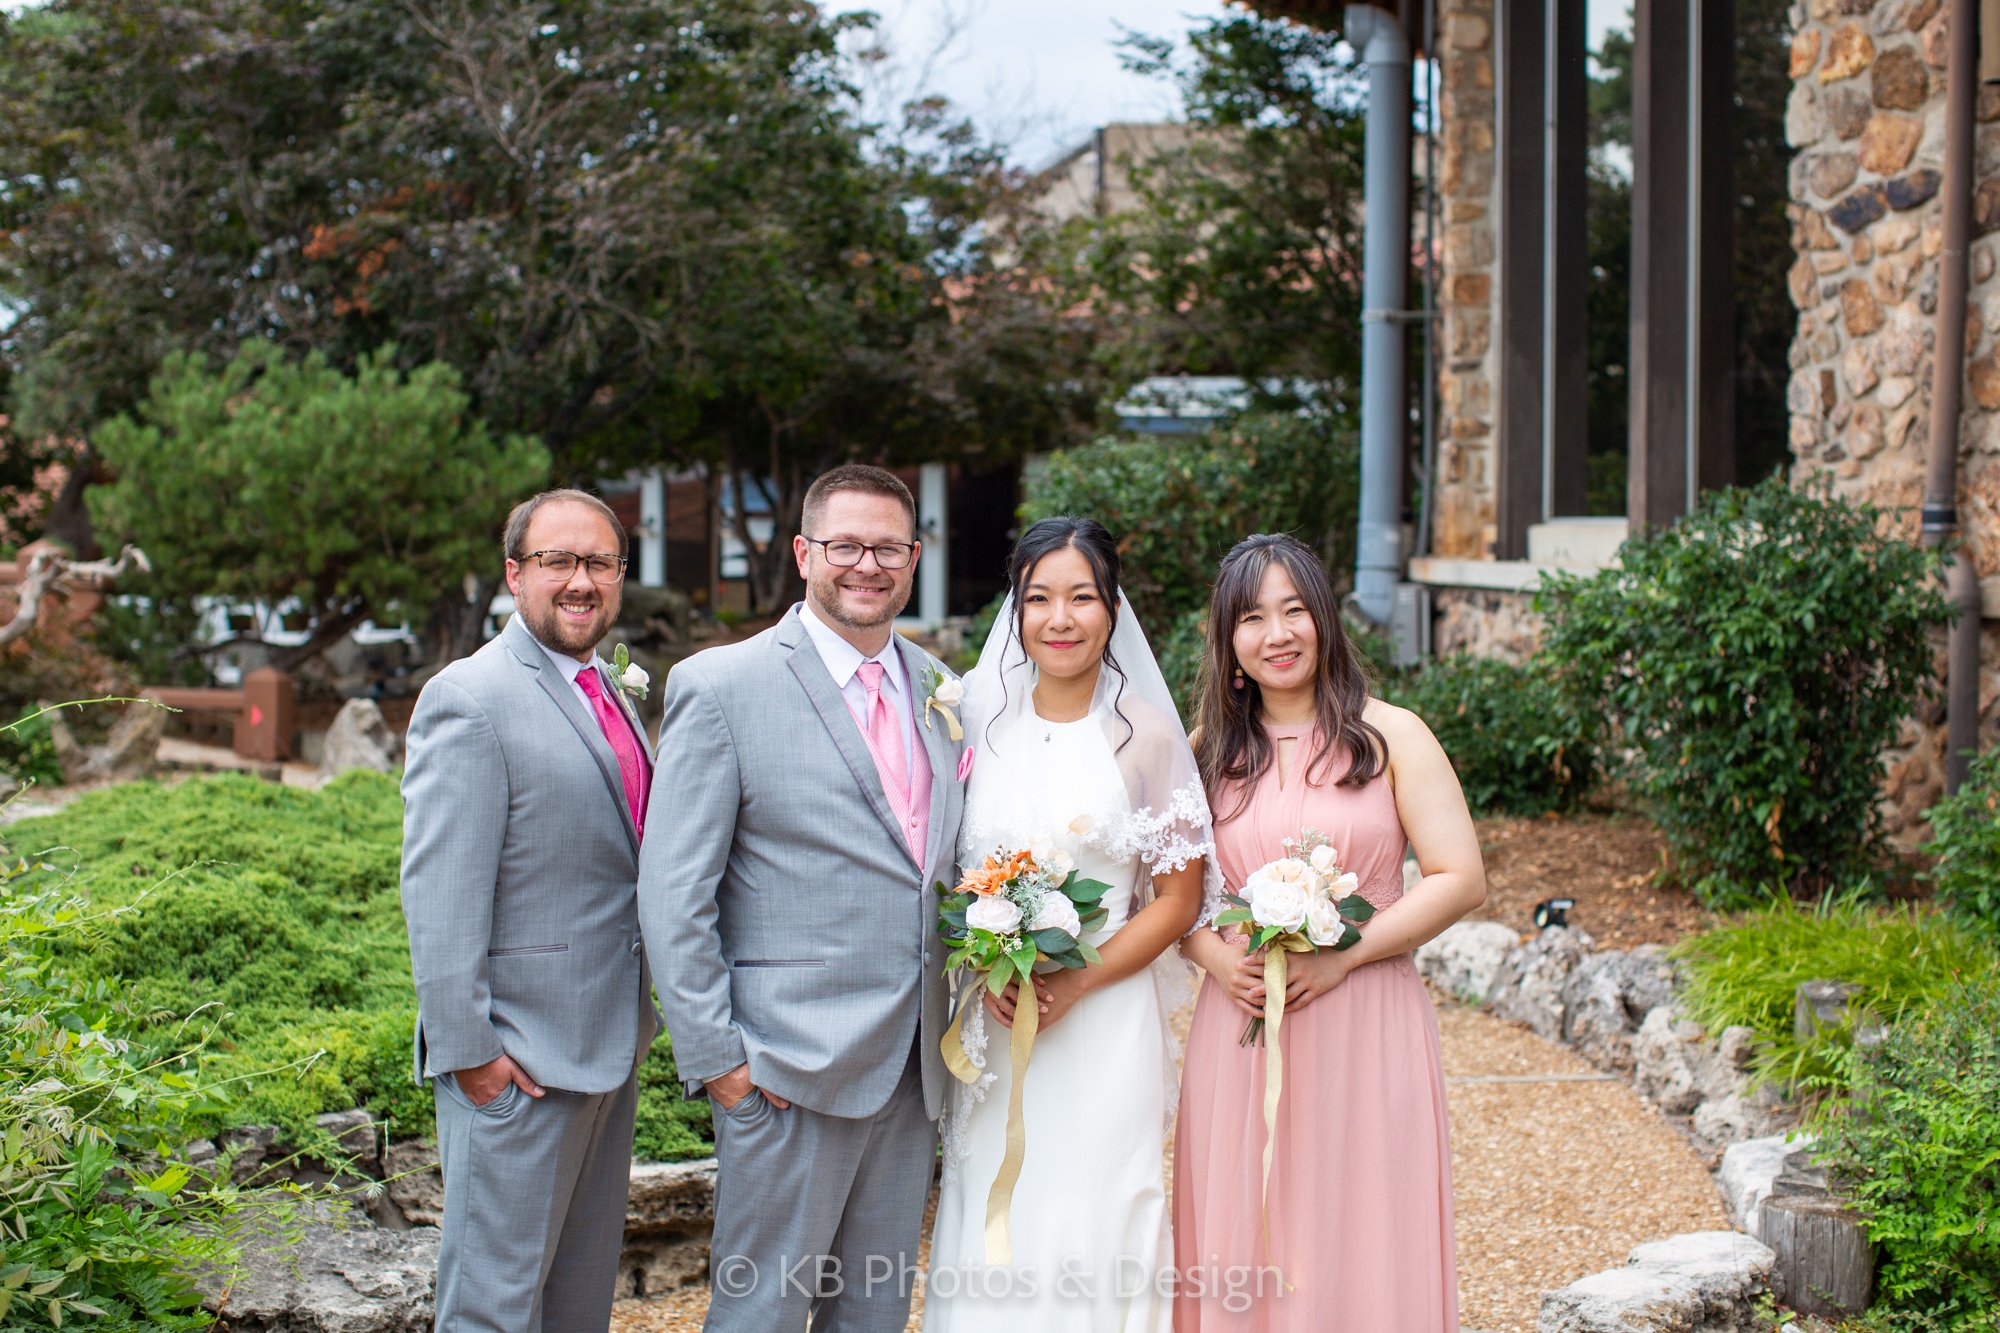 Wedding-Destination-Photography-Lake-of-the-Ozarks-Missouri-Nick_Irene-Jefferson-City-bride-groom-Lodge-of-Four-Seasons-wedding-photographer-KB-Photos-and-Design-265.jpg